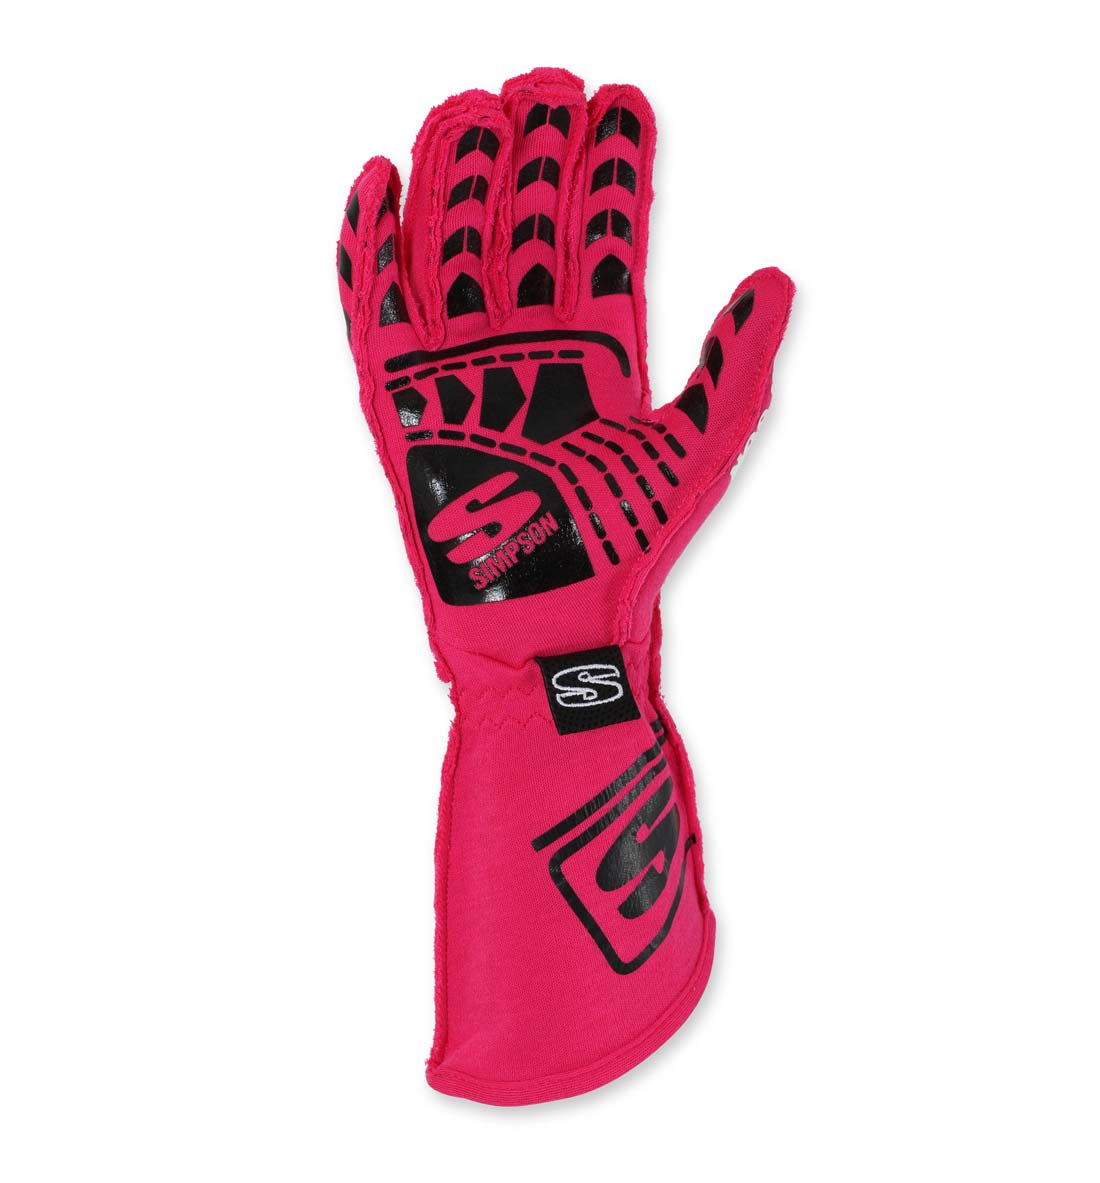 Simpson Endurance Race Gloves - Pink